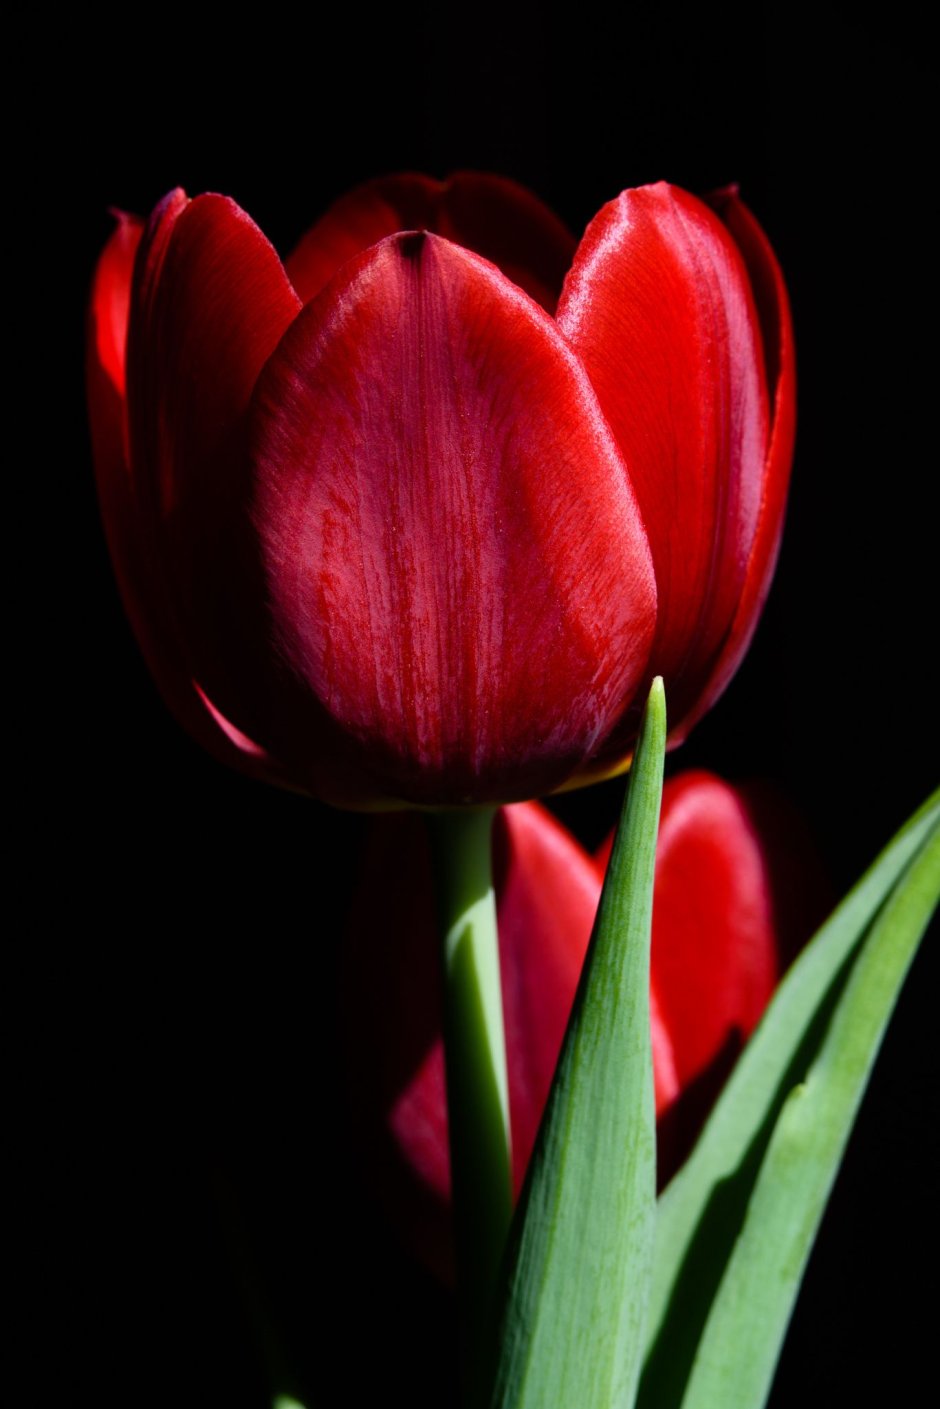 Темно красные тюльпаны